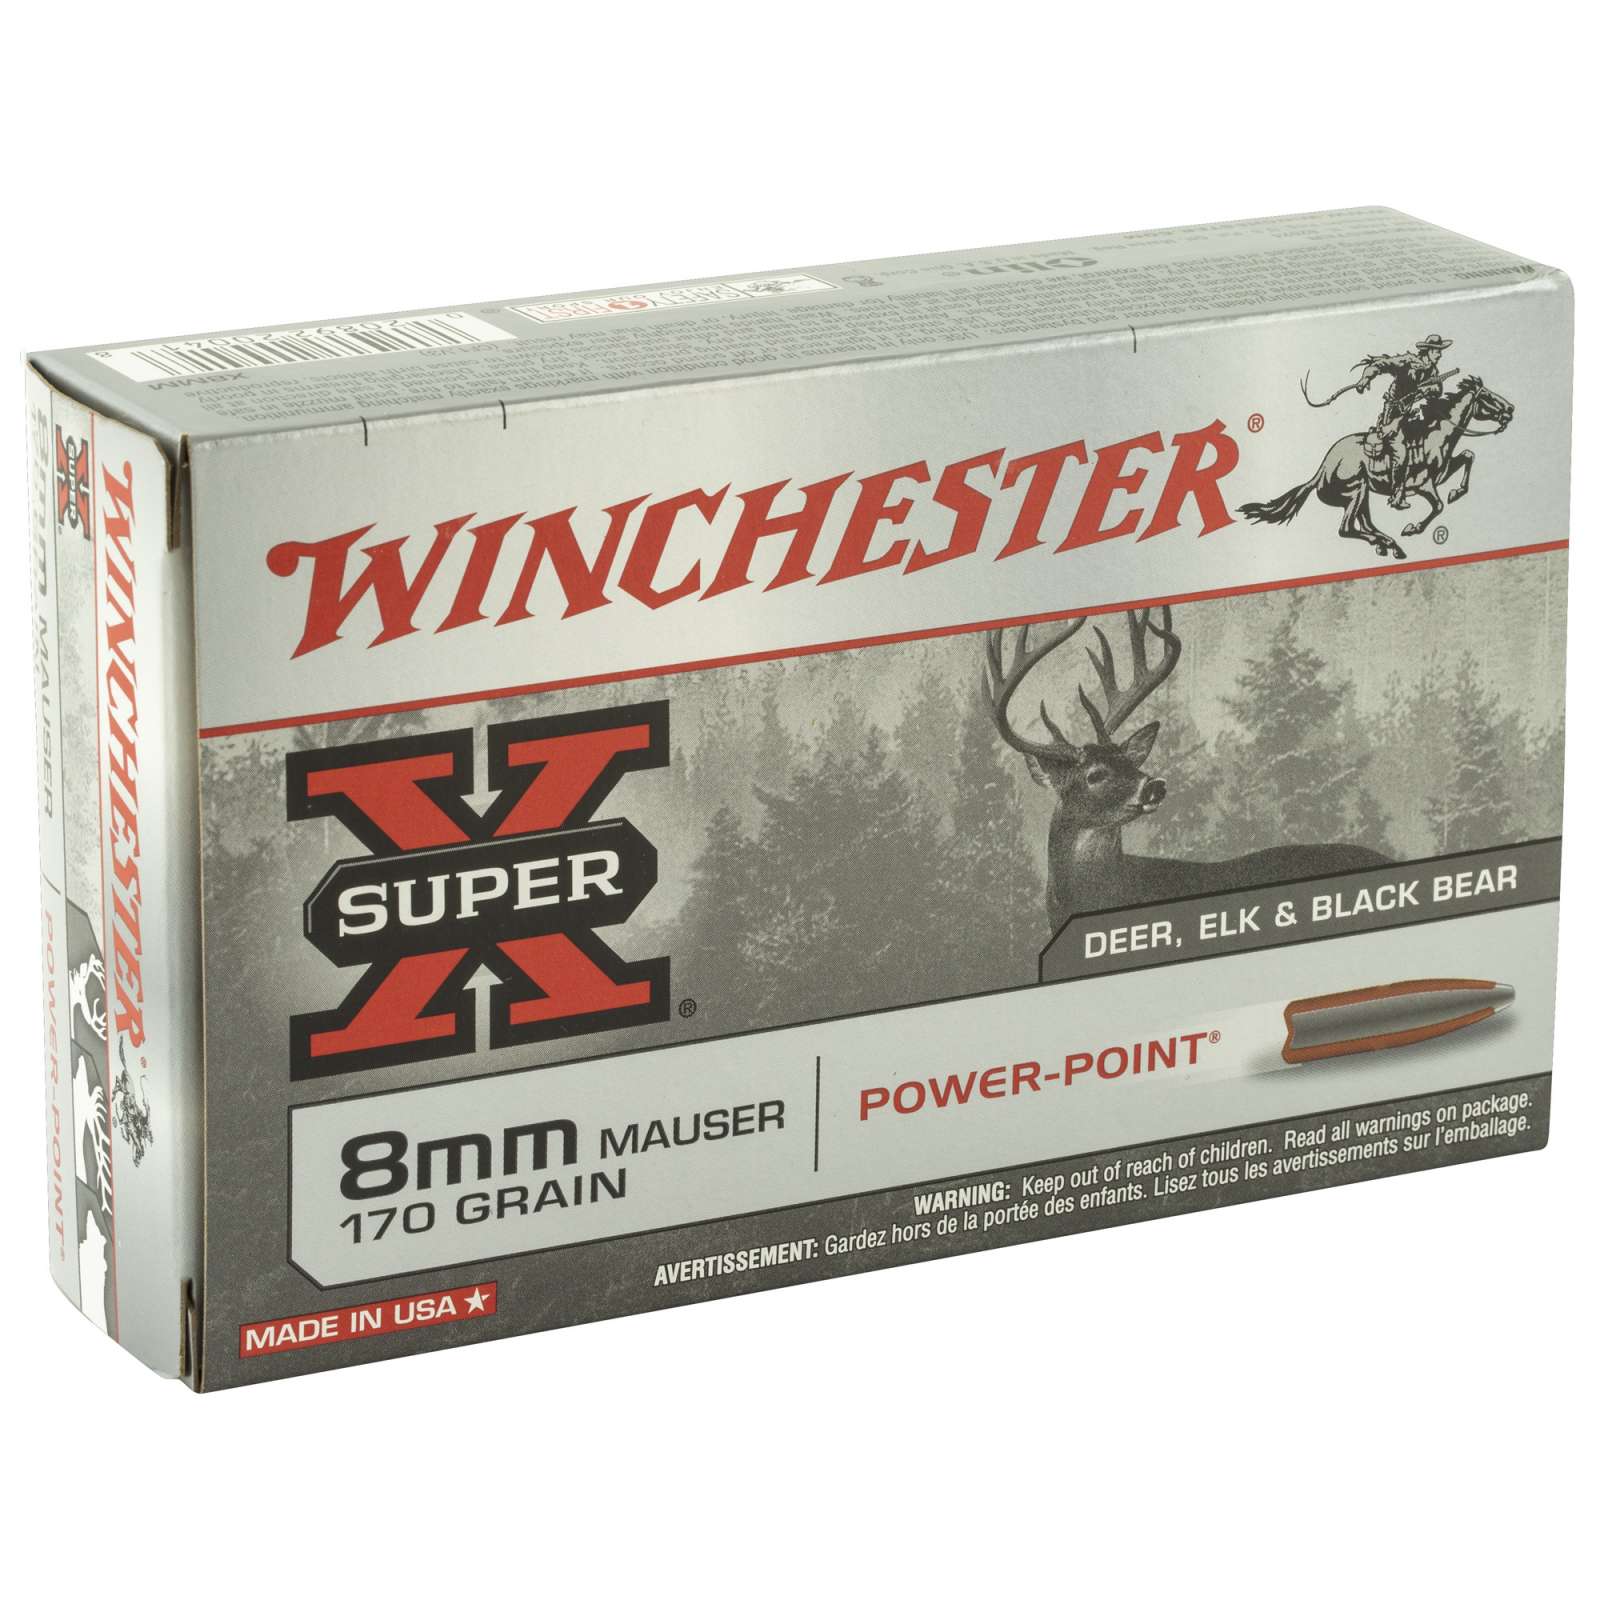 Winchester Ammo (PP) USA Range X8MM Power-Point | Bx/ Cs gr 20 8mm 170 10 Mauser Super-X